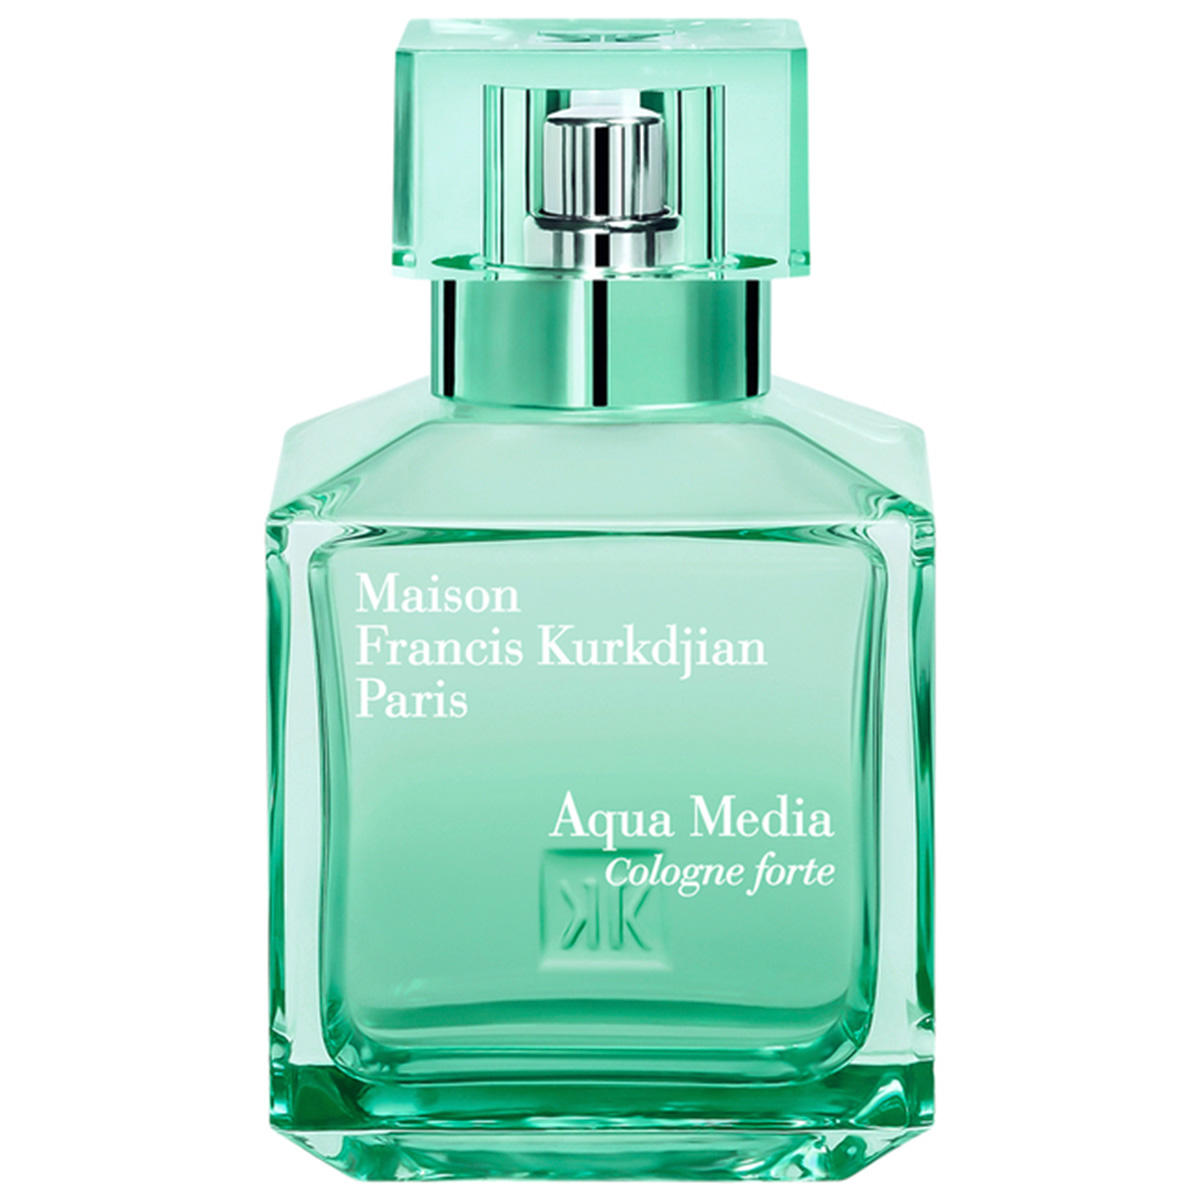 Maison Francis Kurkdjian Paris Aqua Media Cologne forte Eau de Parfum  - 1